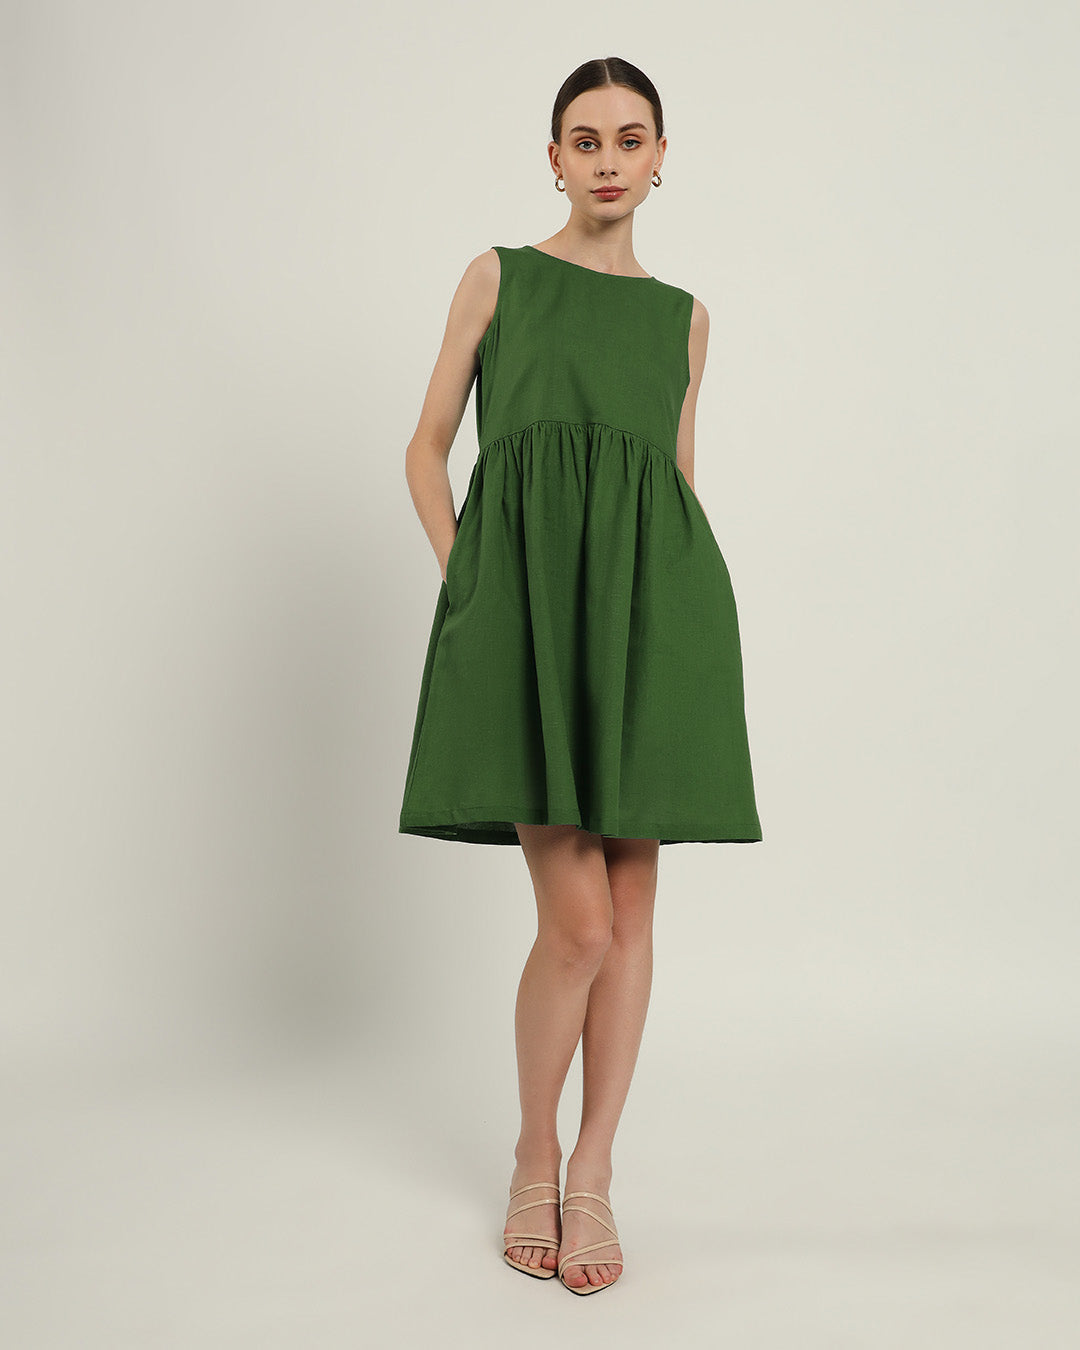 The Chania Emerald Cotton Dress